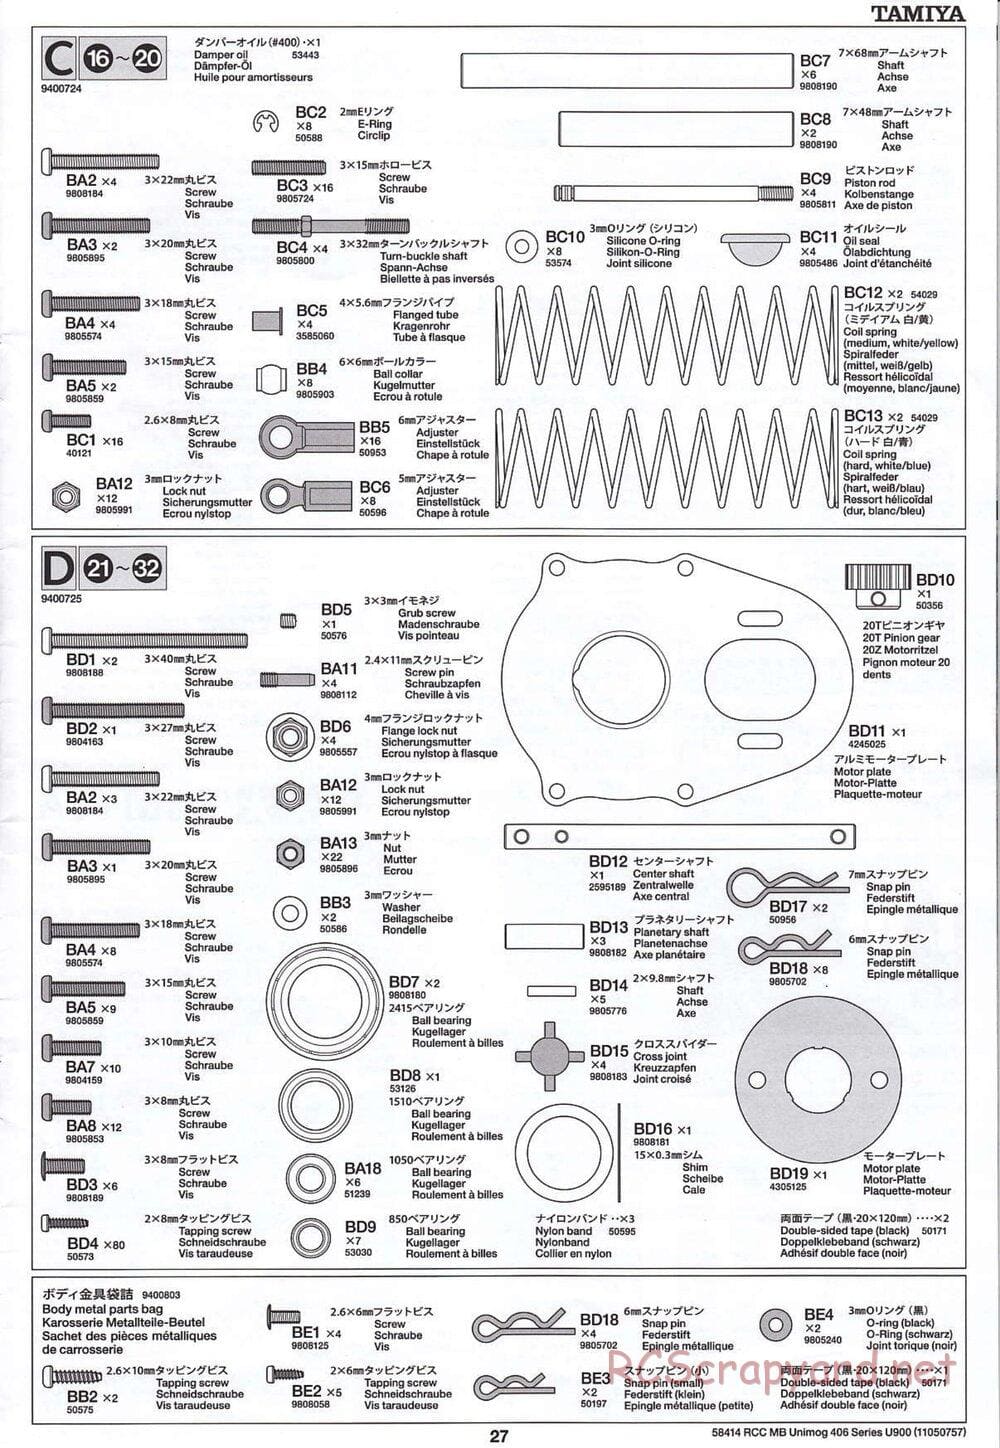 Tamiya - Mercedes-Benz Unimog 406 Series U900 - CR-01 Chassis - Manual - Page 27